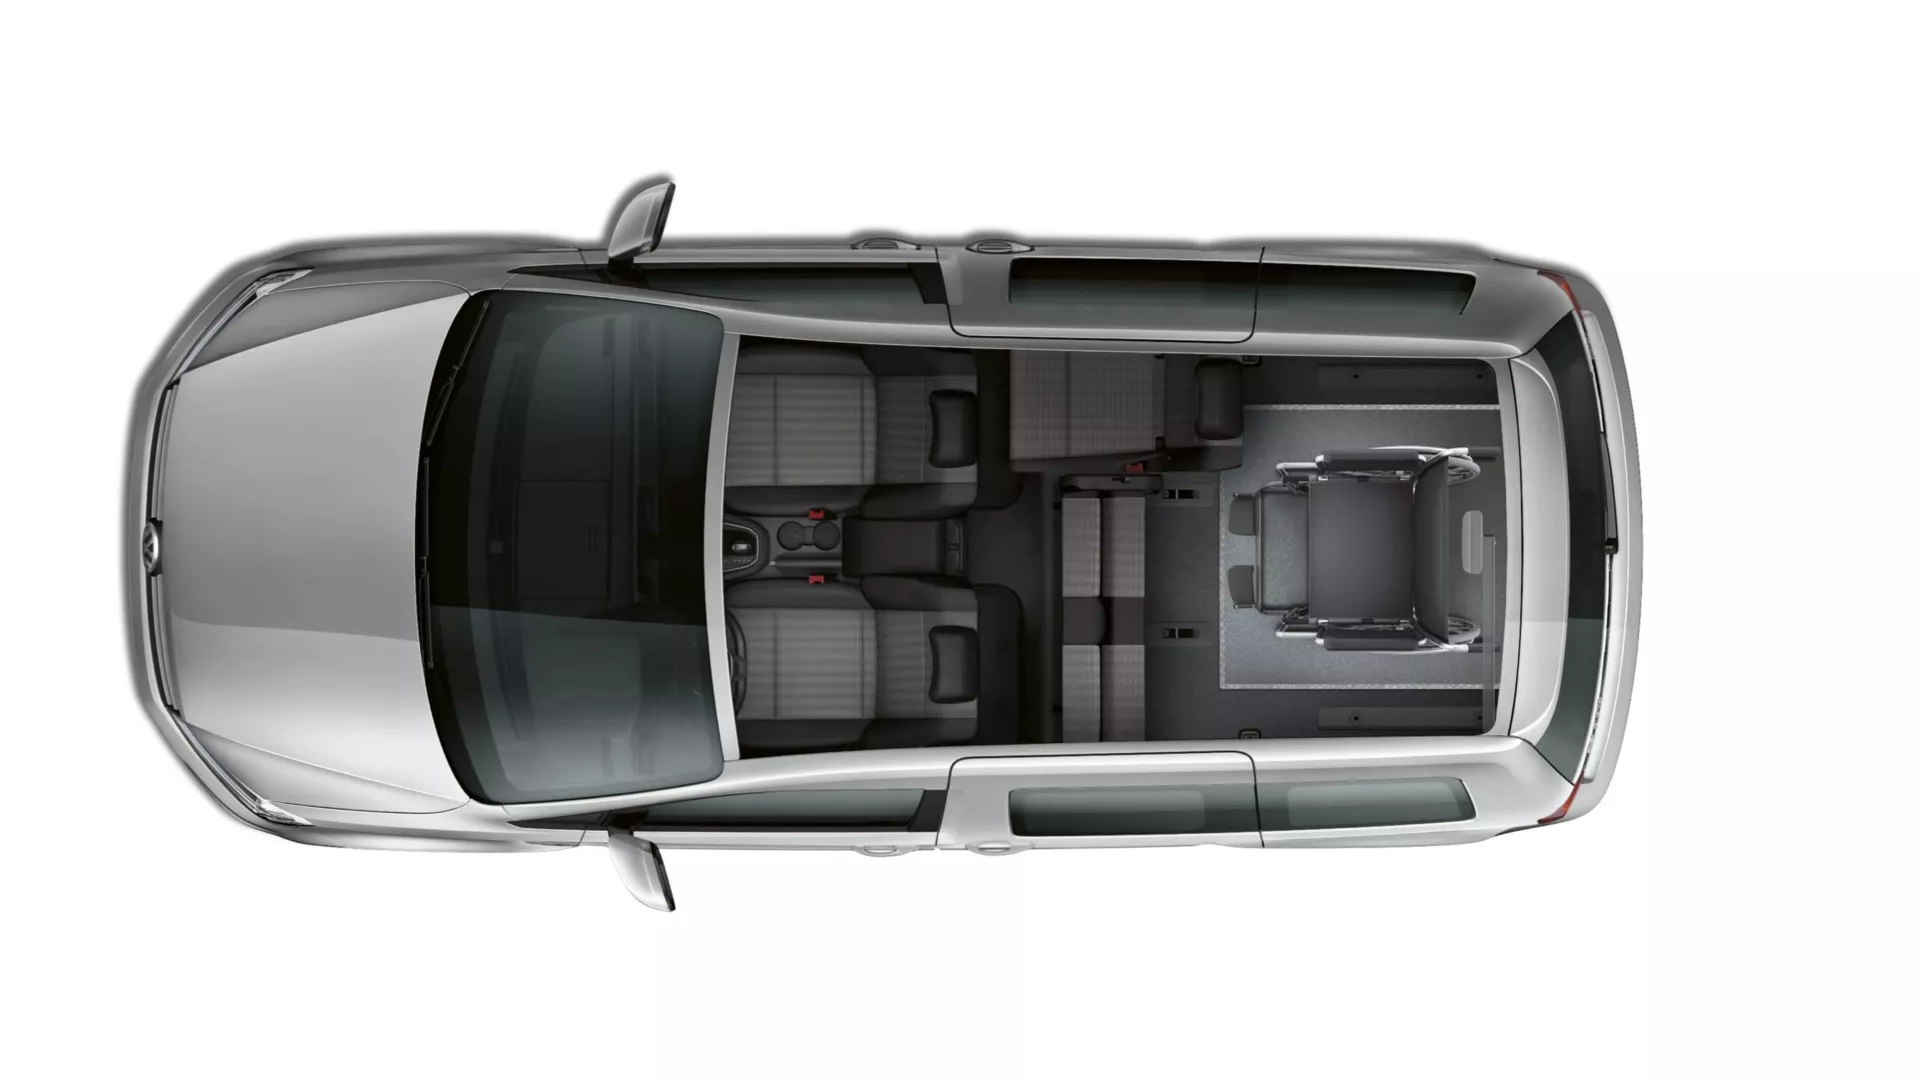 VW Caddy Sitzkonfiguration mit Rollstuhl